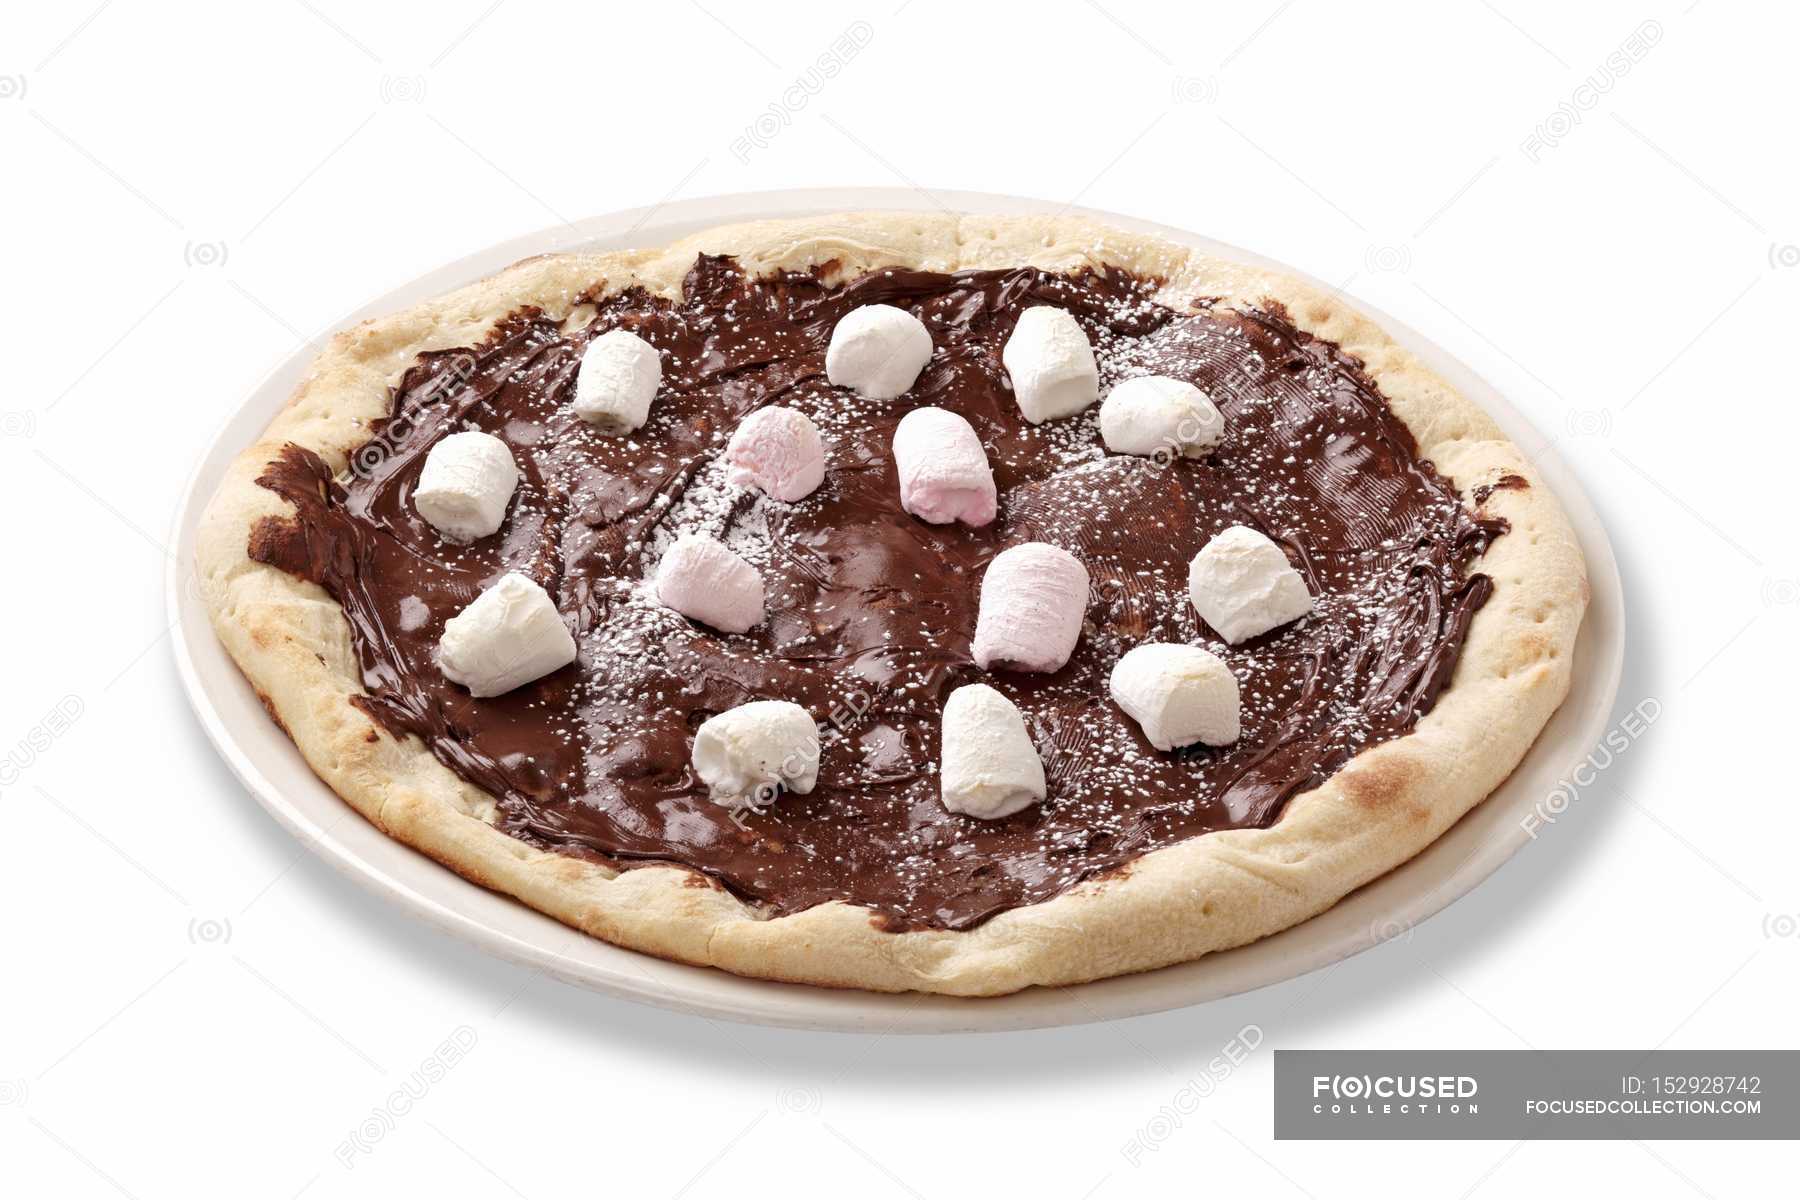 шоколадную пиццу рецепт фото 109